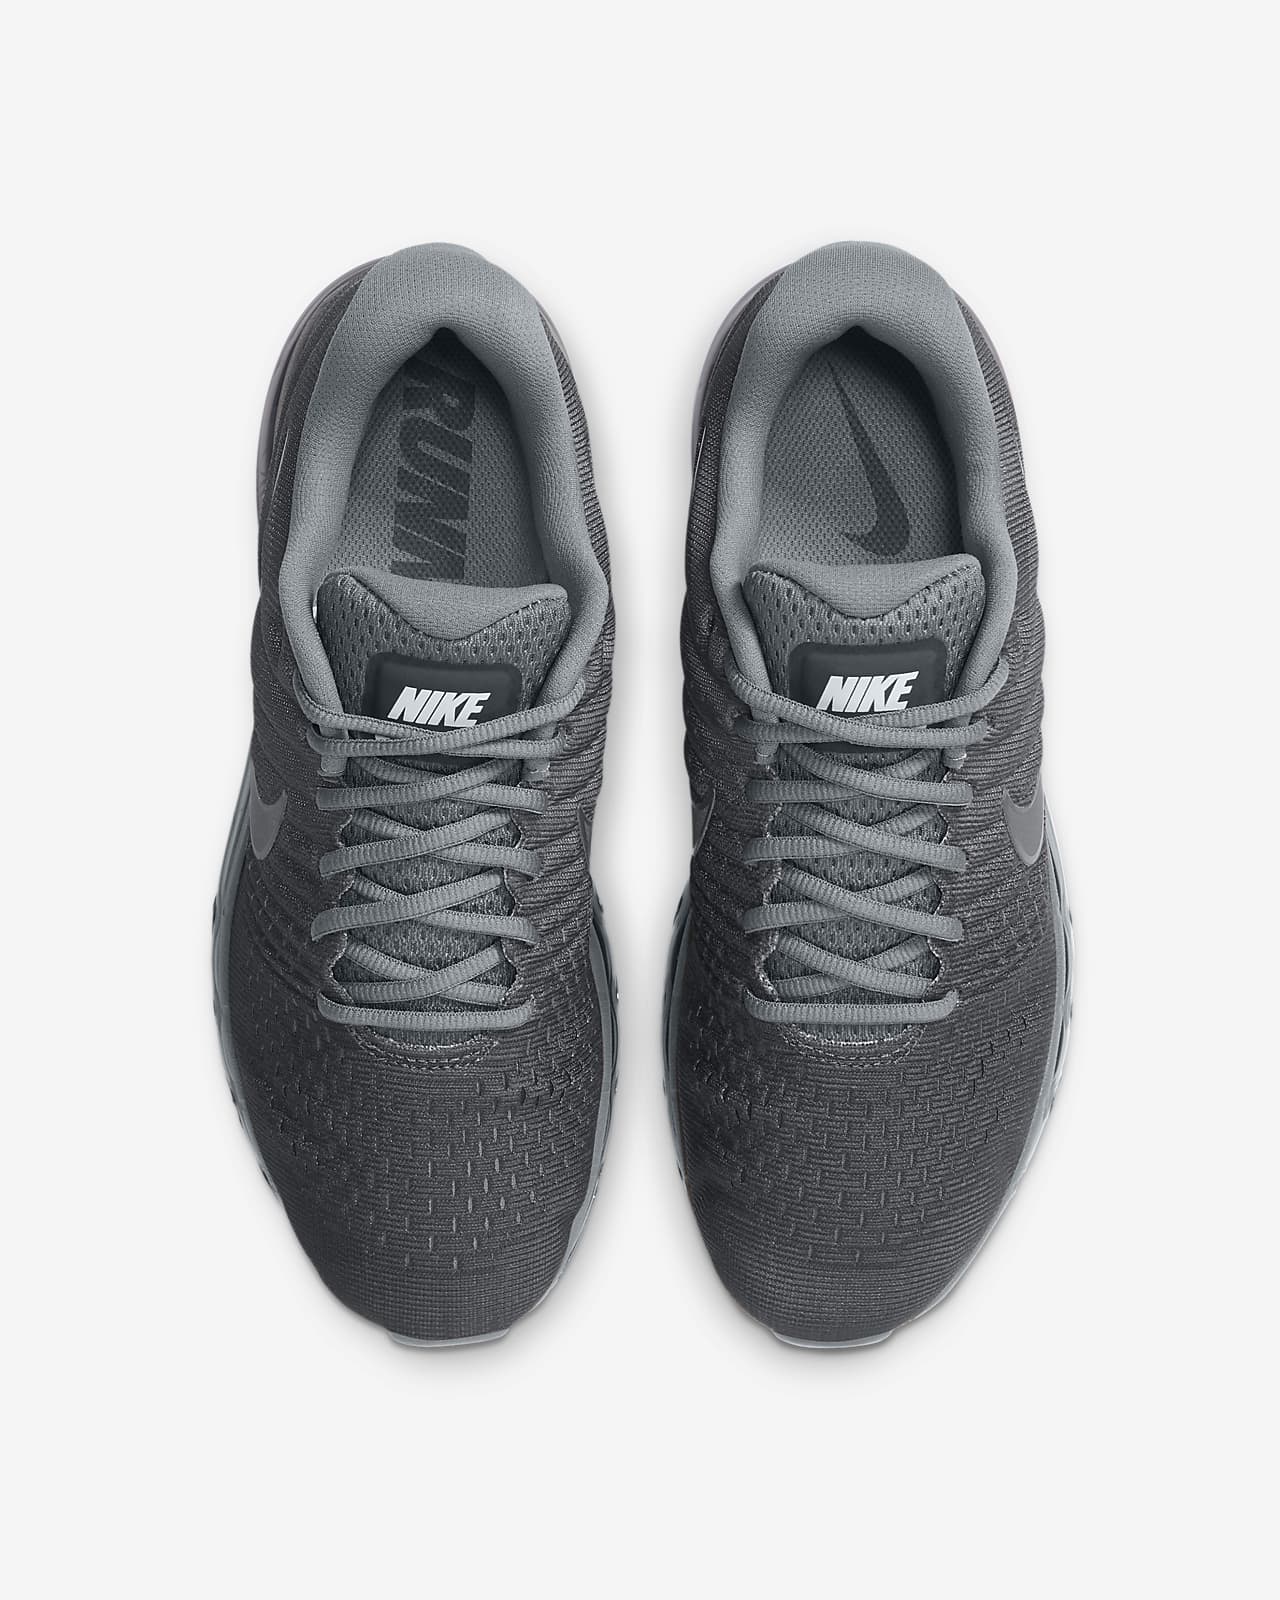 Misleidend Productie Uitdrukking Nike Air Max 2017 Men's Shoes. Nike.com